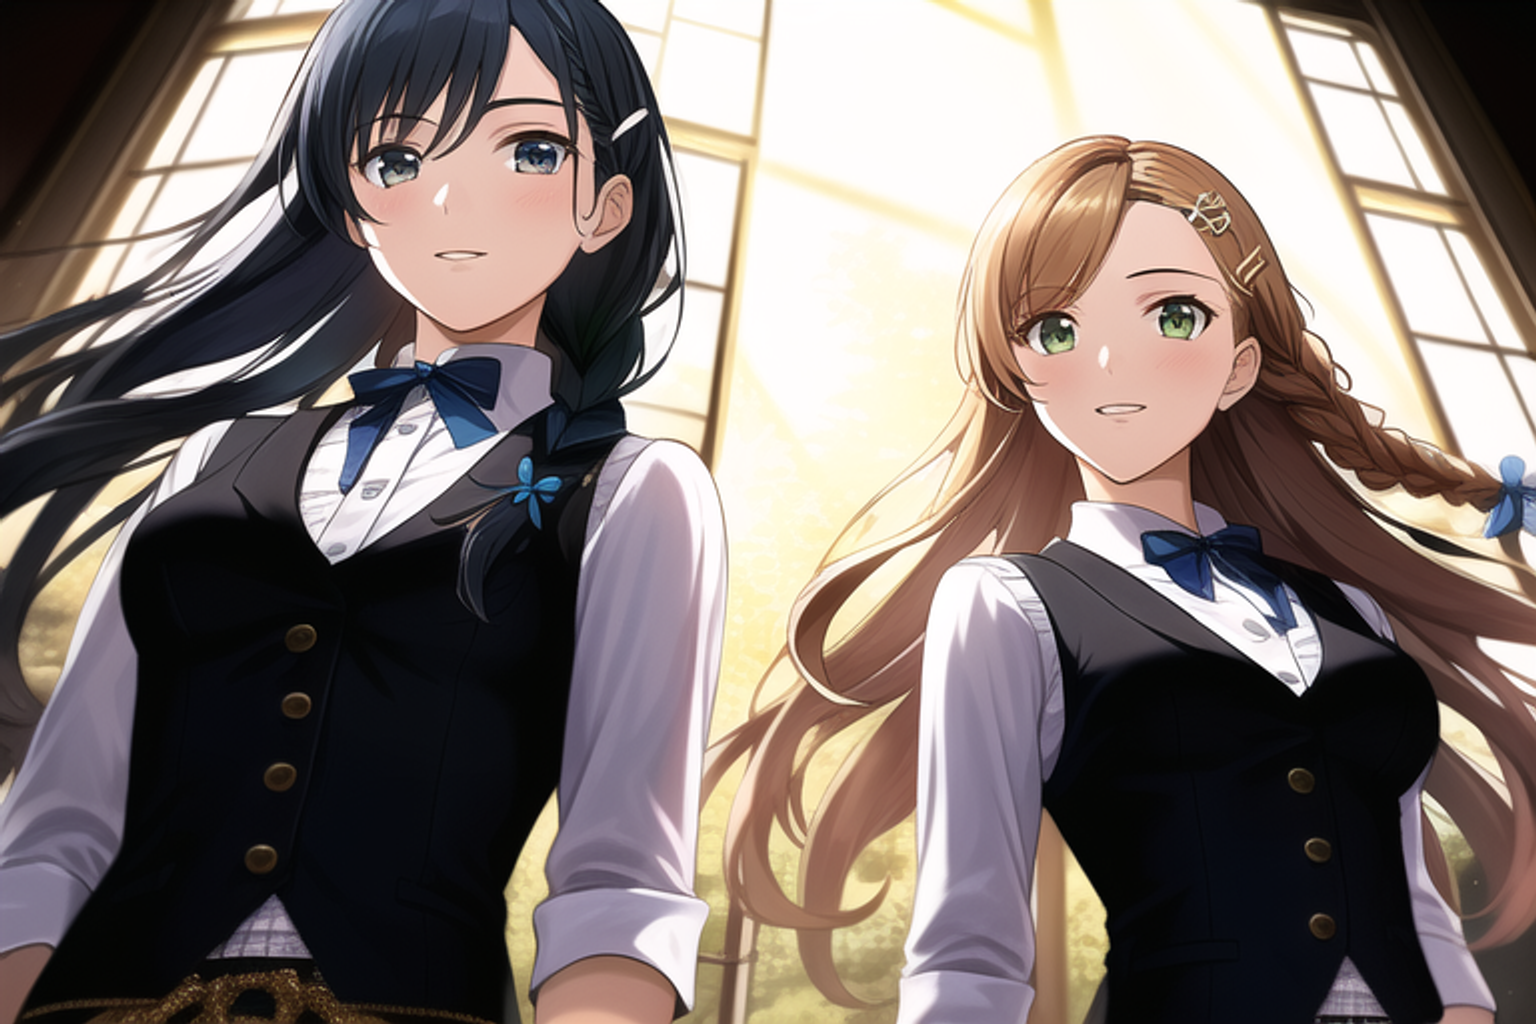 Anime Anime Girls Original Characters Artwork Digital Art Braids Braided Hair Bow Tie Low Angle Two  1536x1024